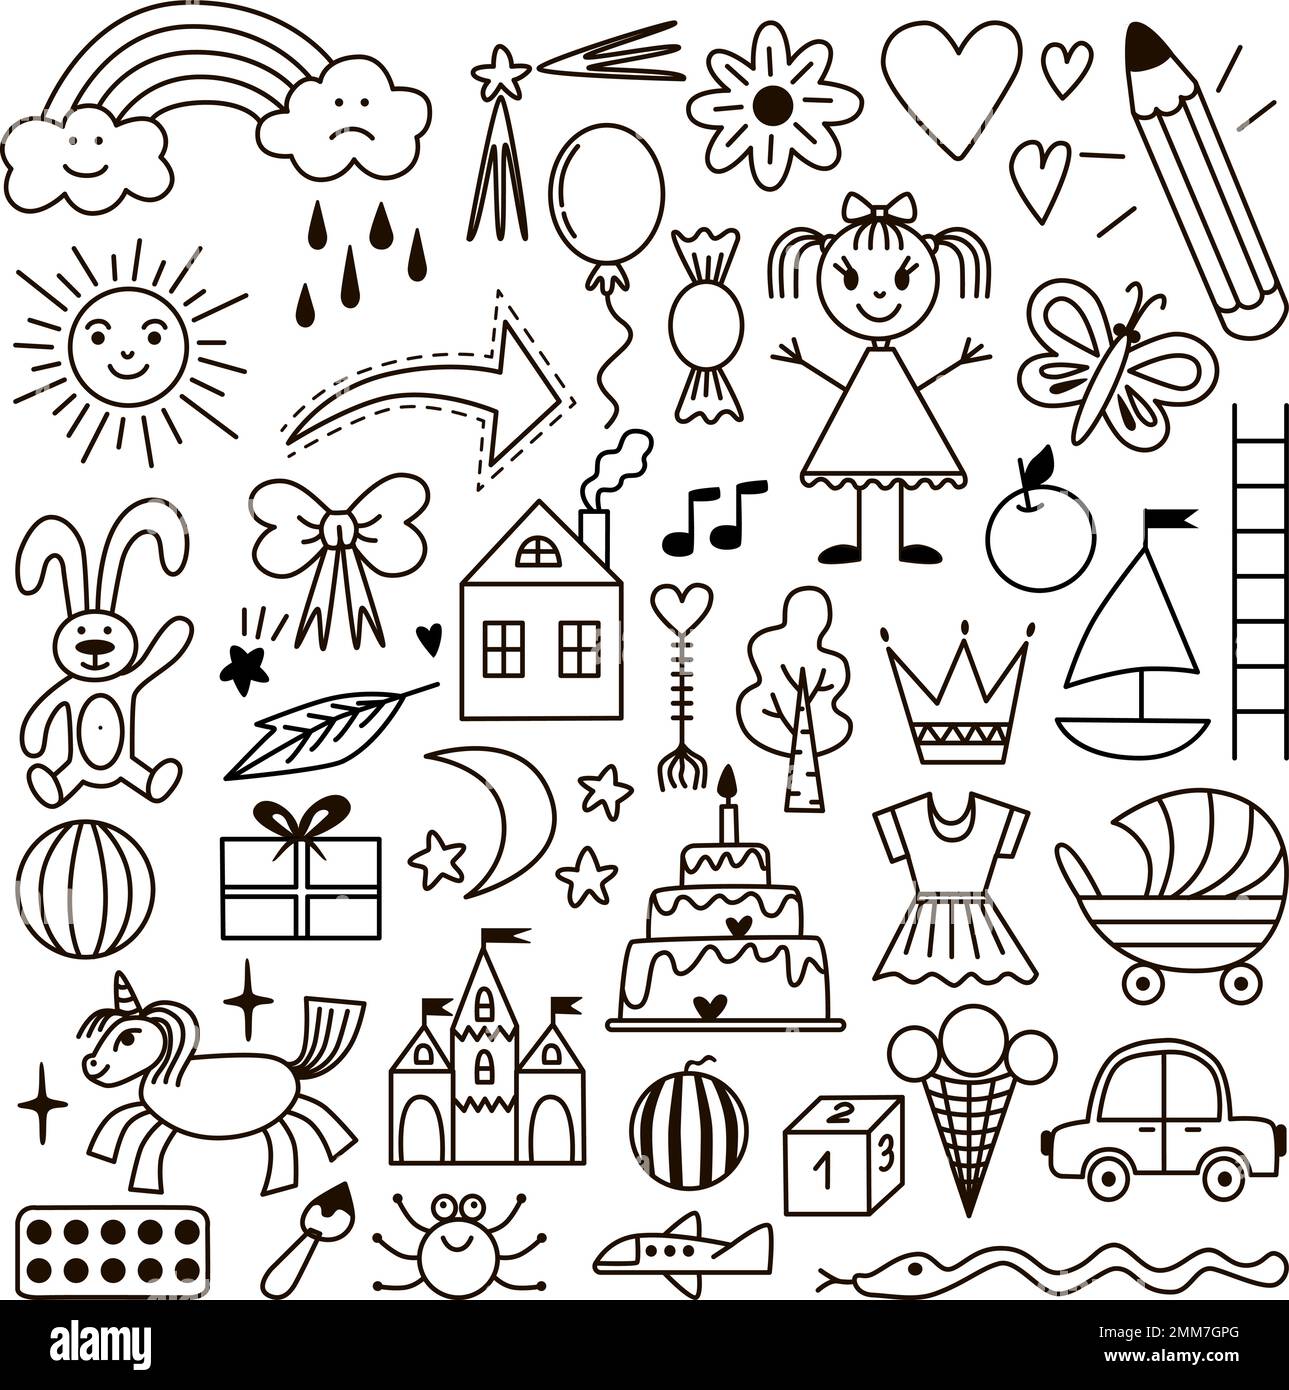 Kid doodle icons, preschool kids graphic outline elements. Children ...